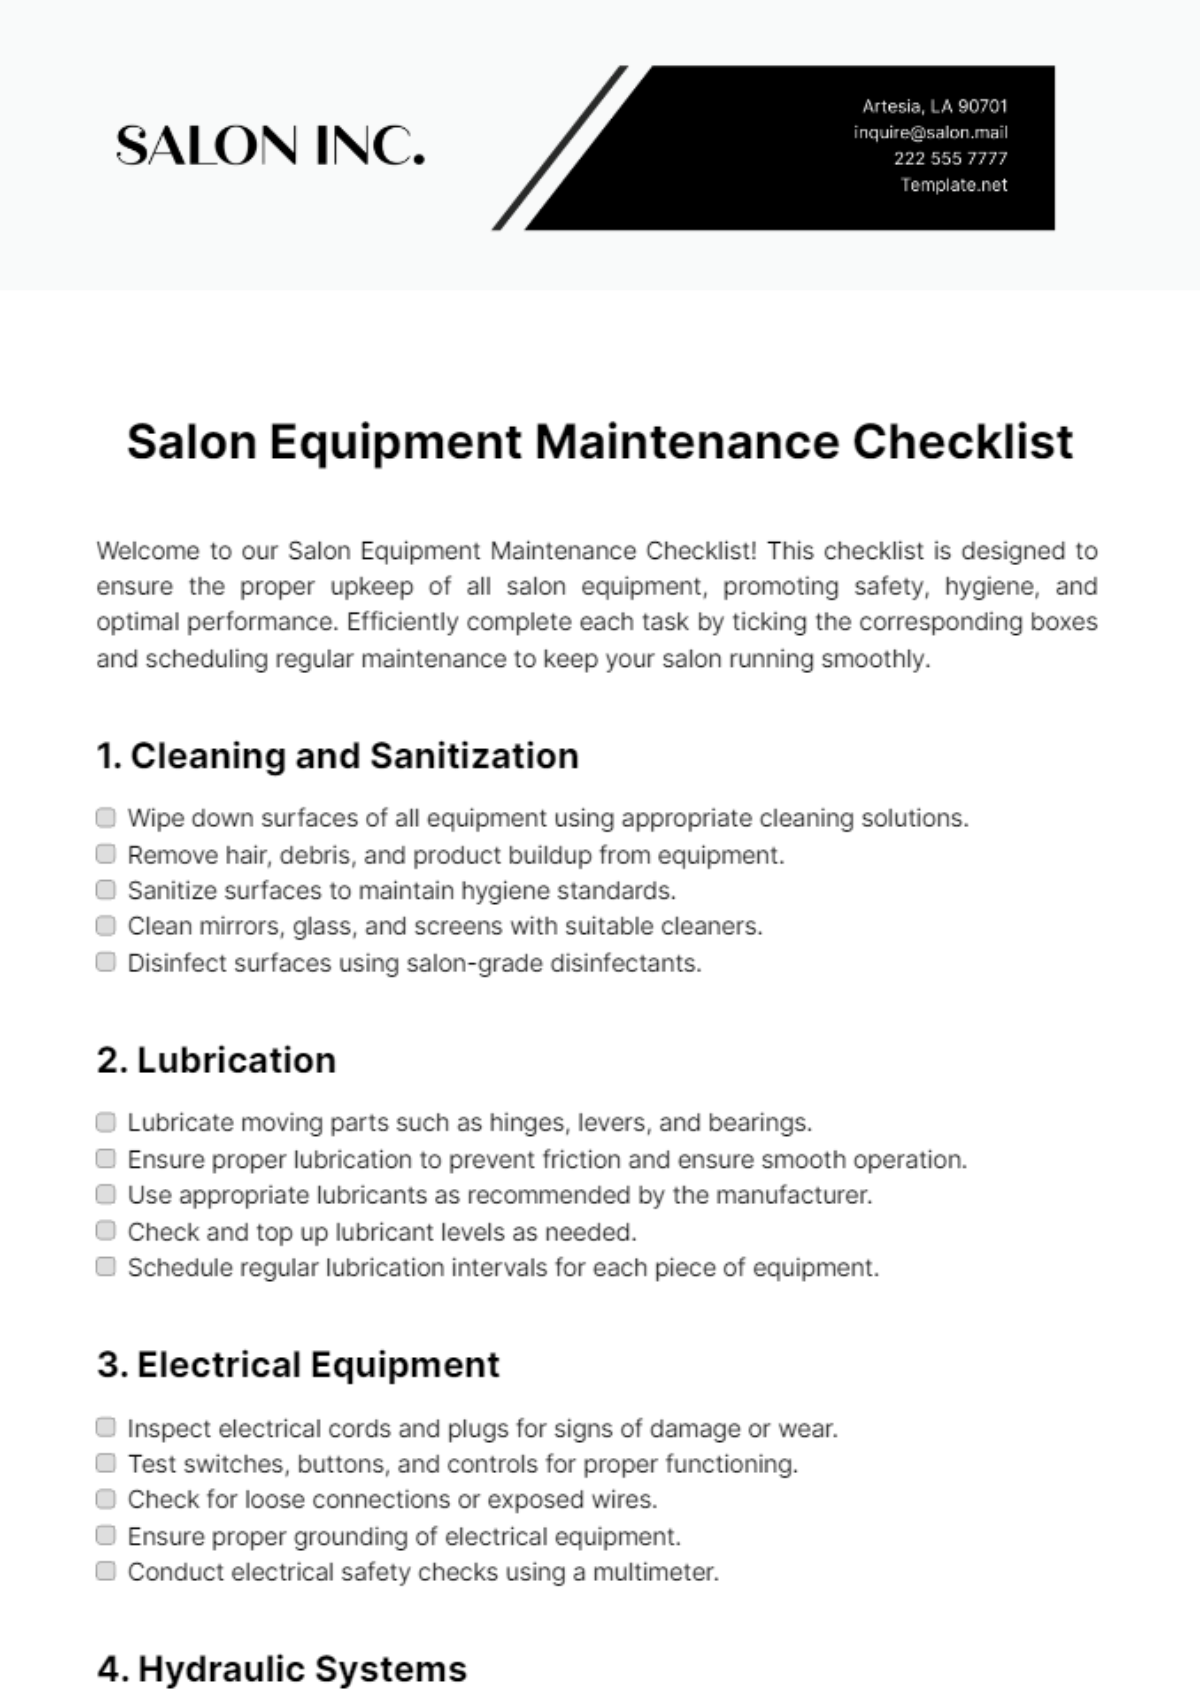 Salon Equipment Maintenance Checklist Template